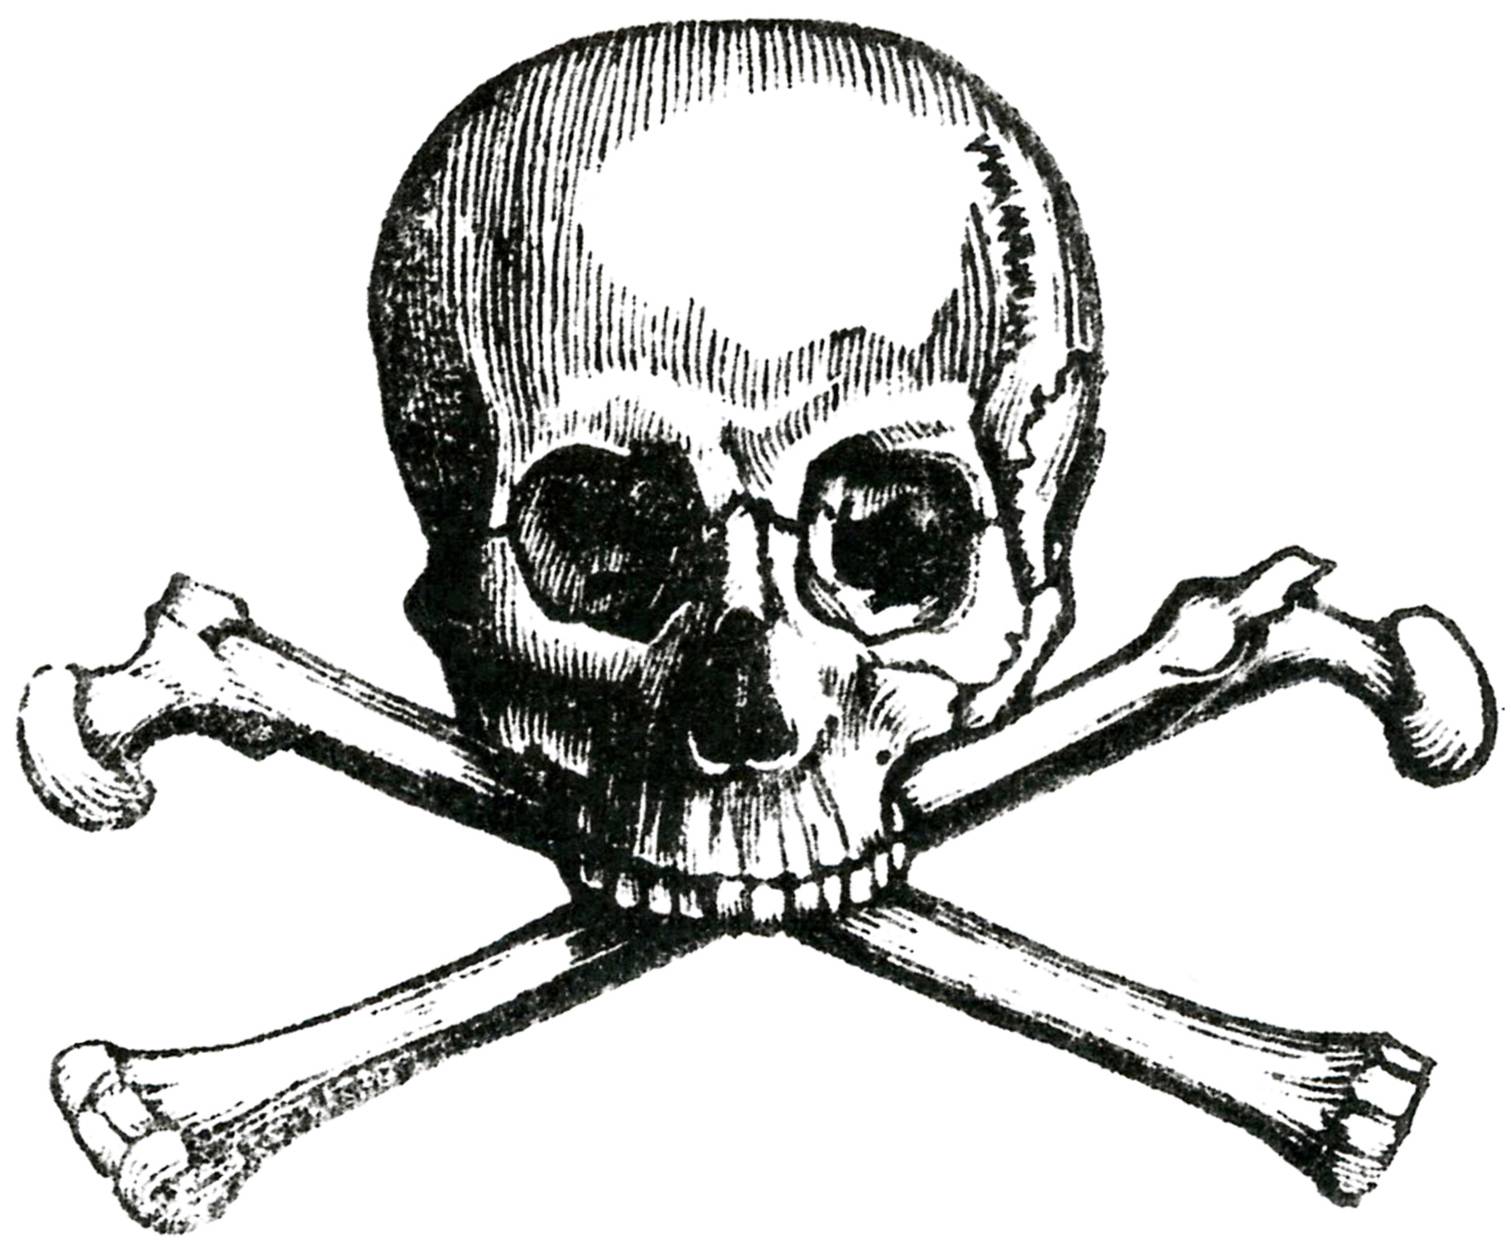 Early-Skull-Image-GraphicsFairy.jpg